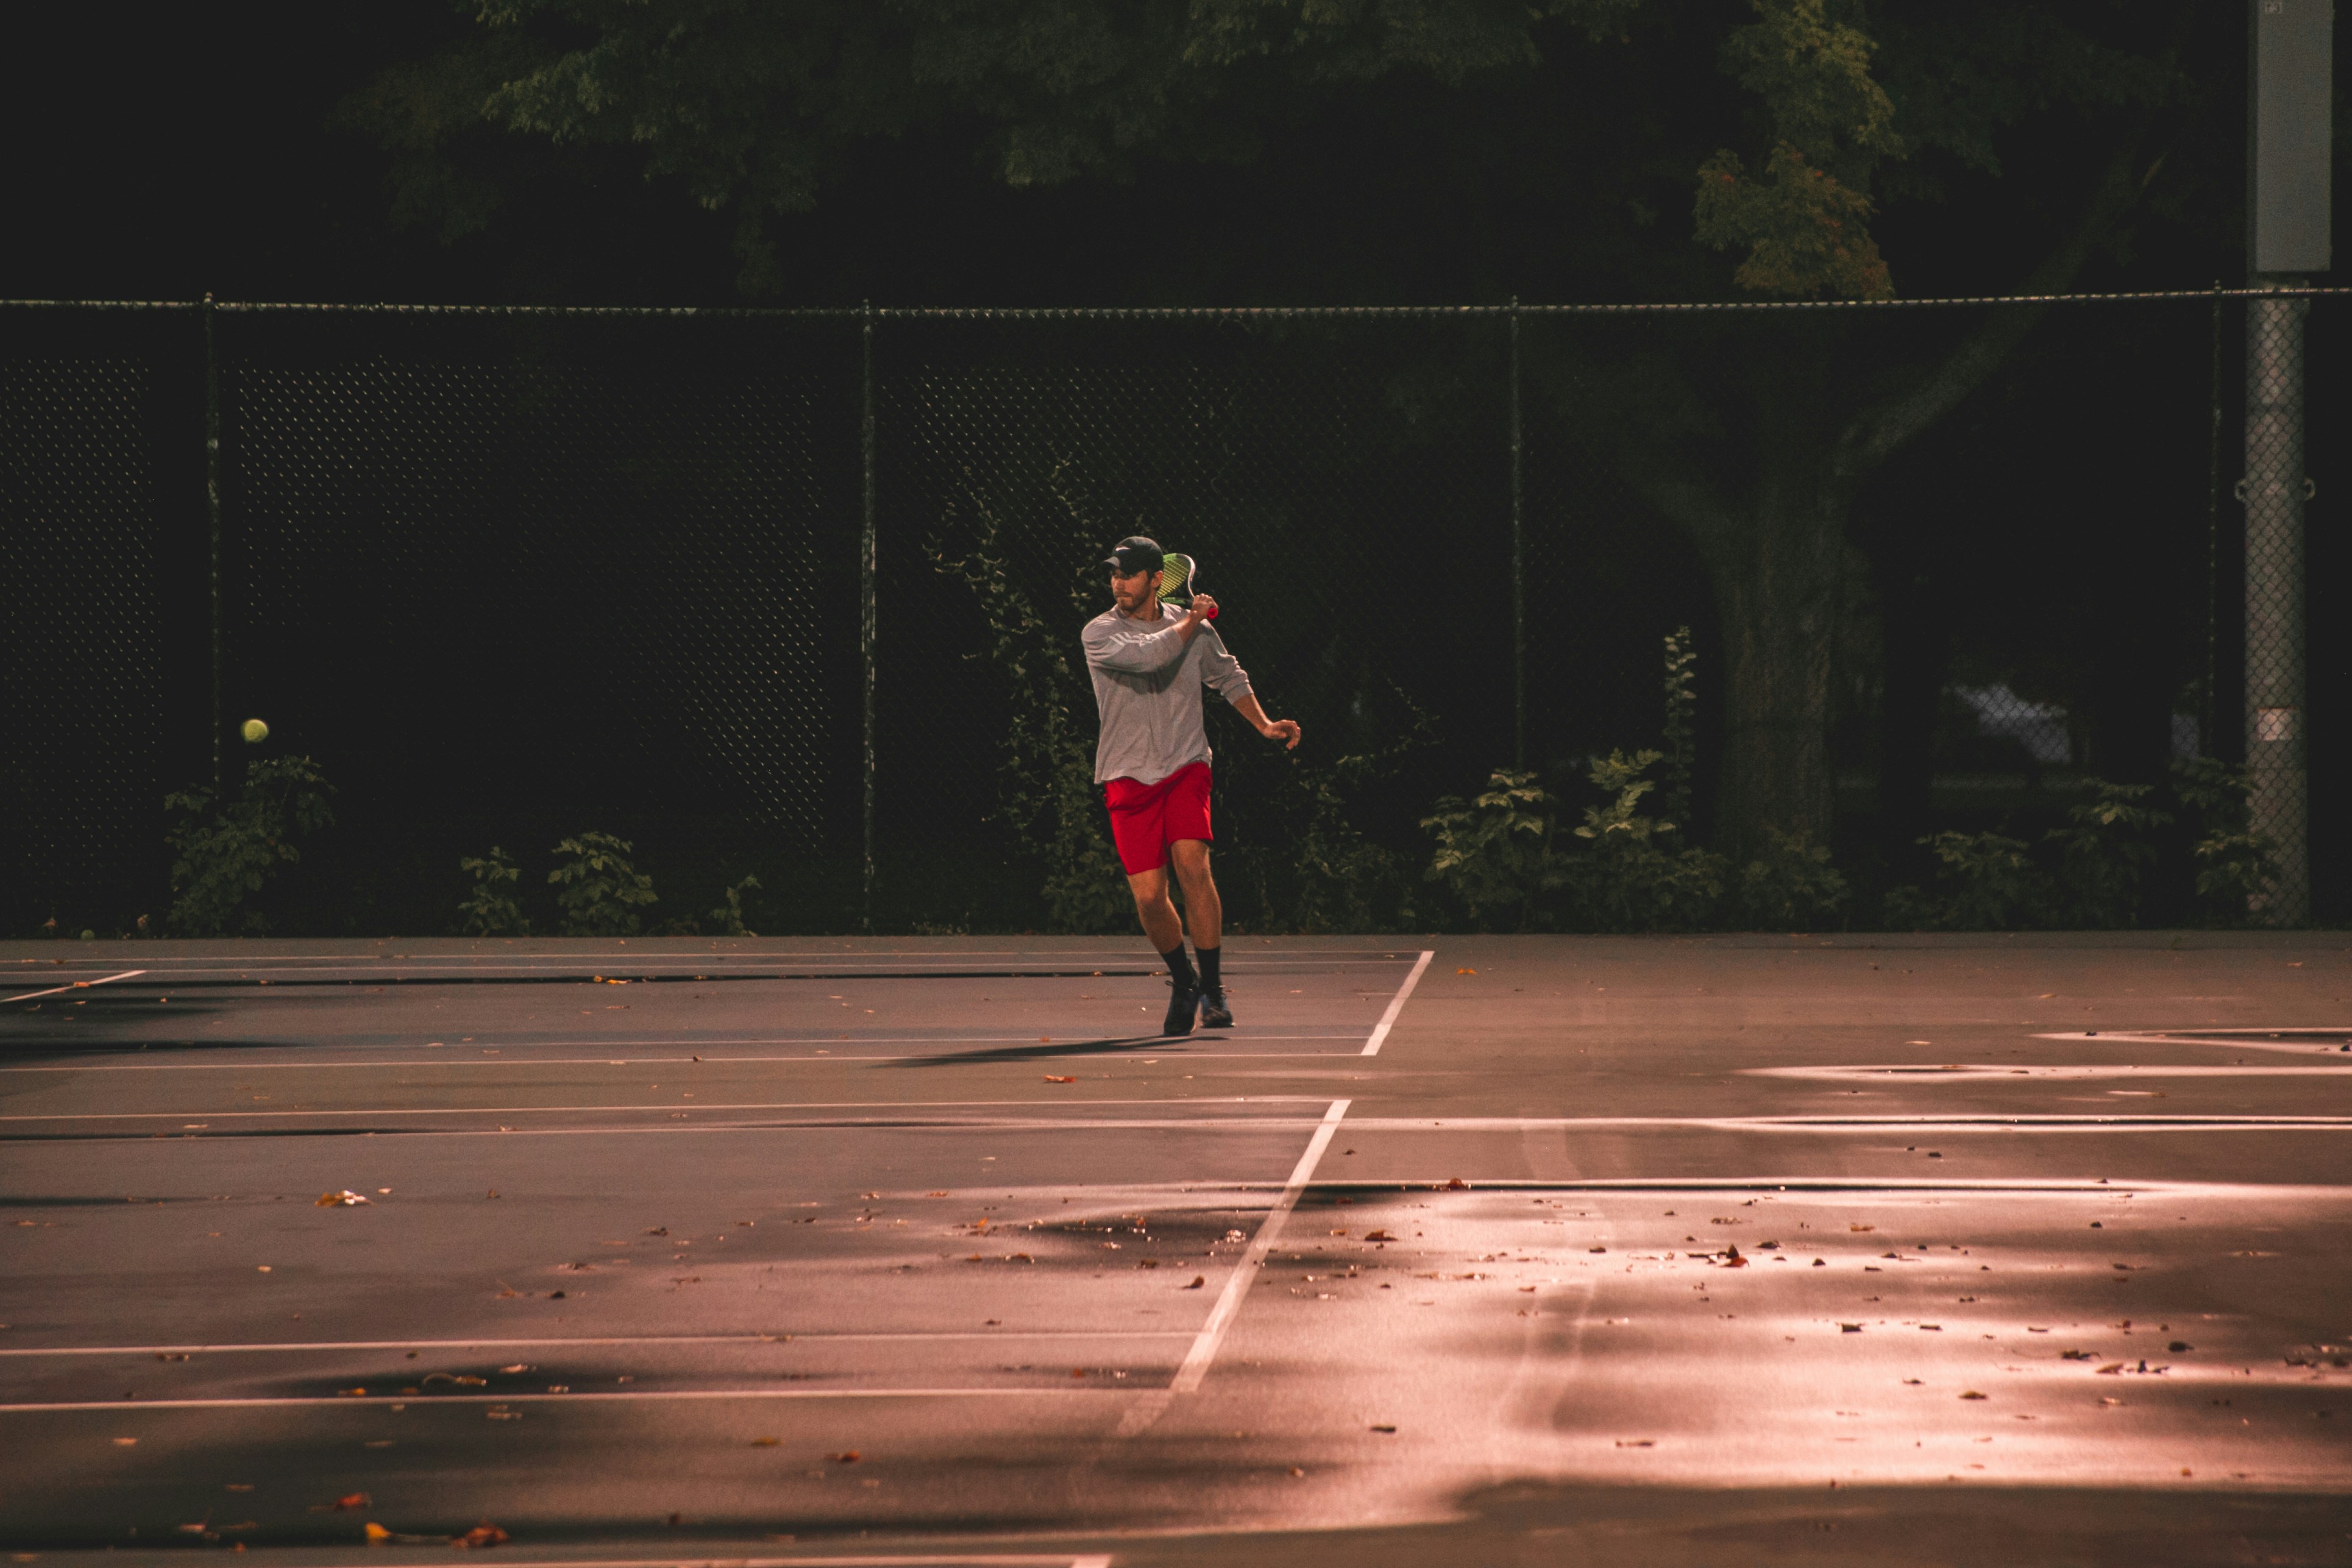 Man playing tennis at sunset in Milwaukee, WI.